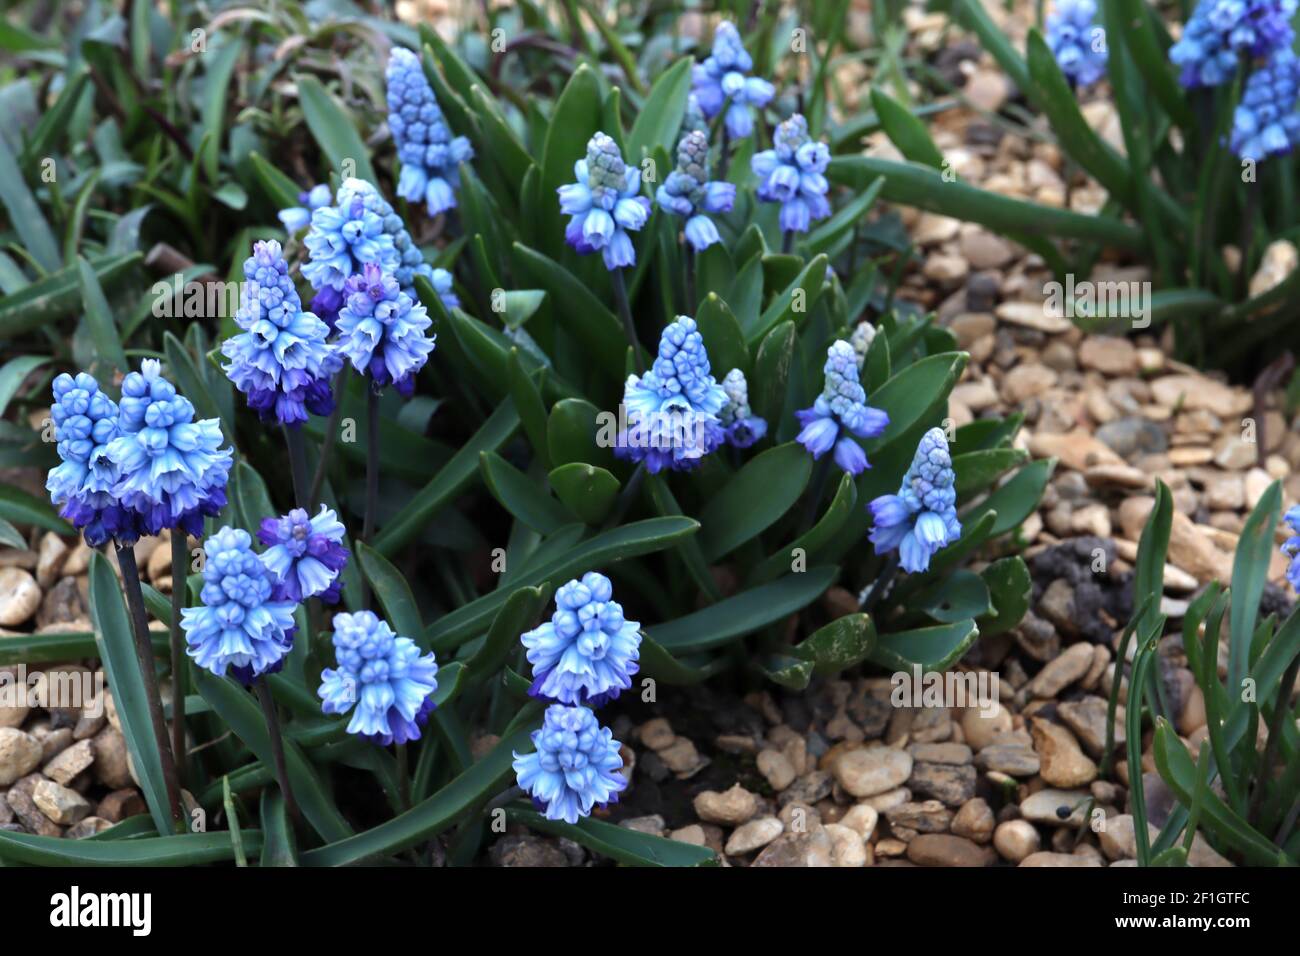 Muscari azureum azure grape hyacinth - tiny urn-shaped pale blue flowers with blue stripes,  March, England, UK Stock Photo